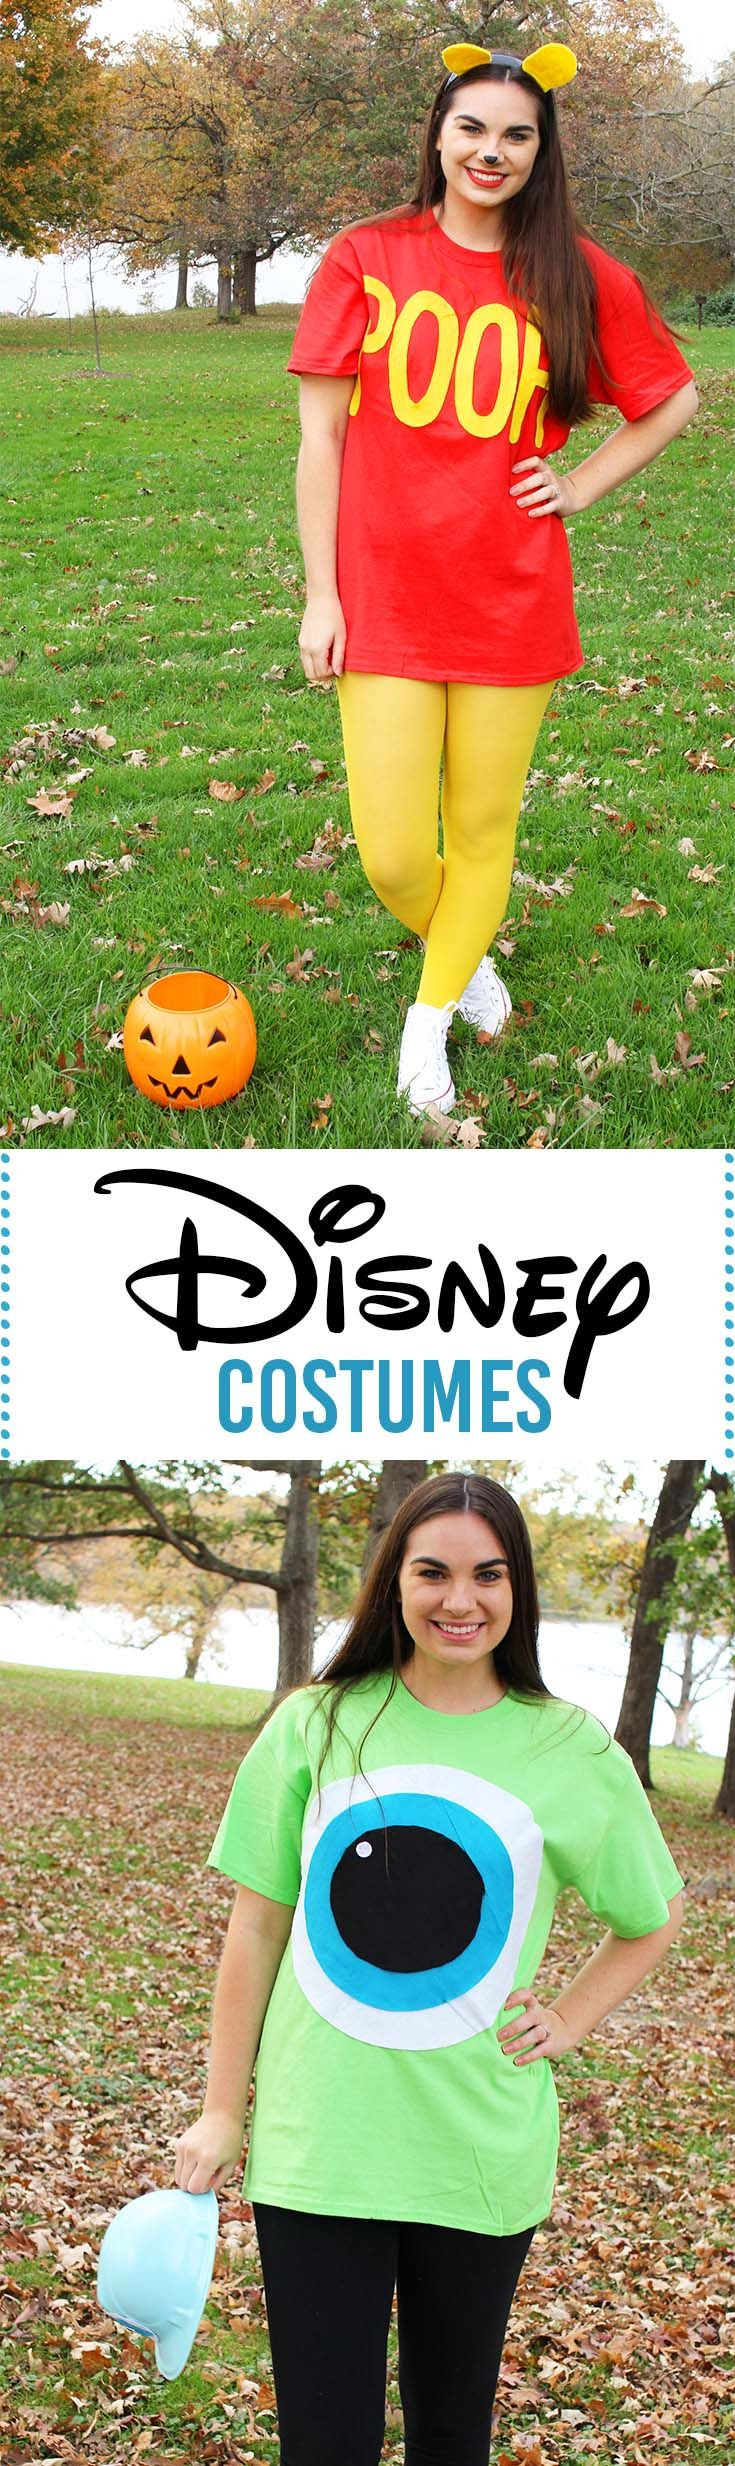 Disney Character Costume DIY
 DIY Last Minute Disney Halloween Costumes Super easy and